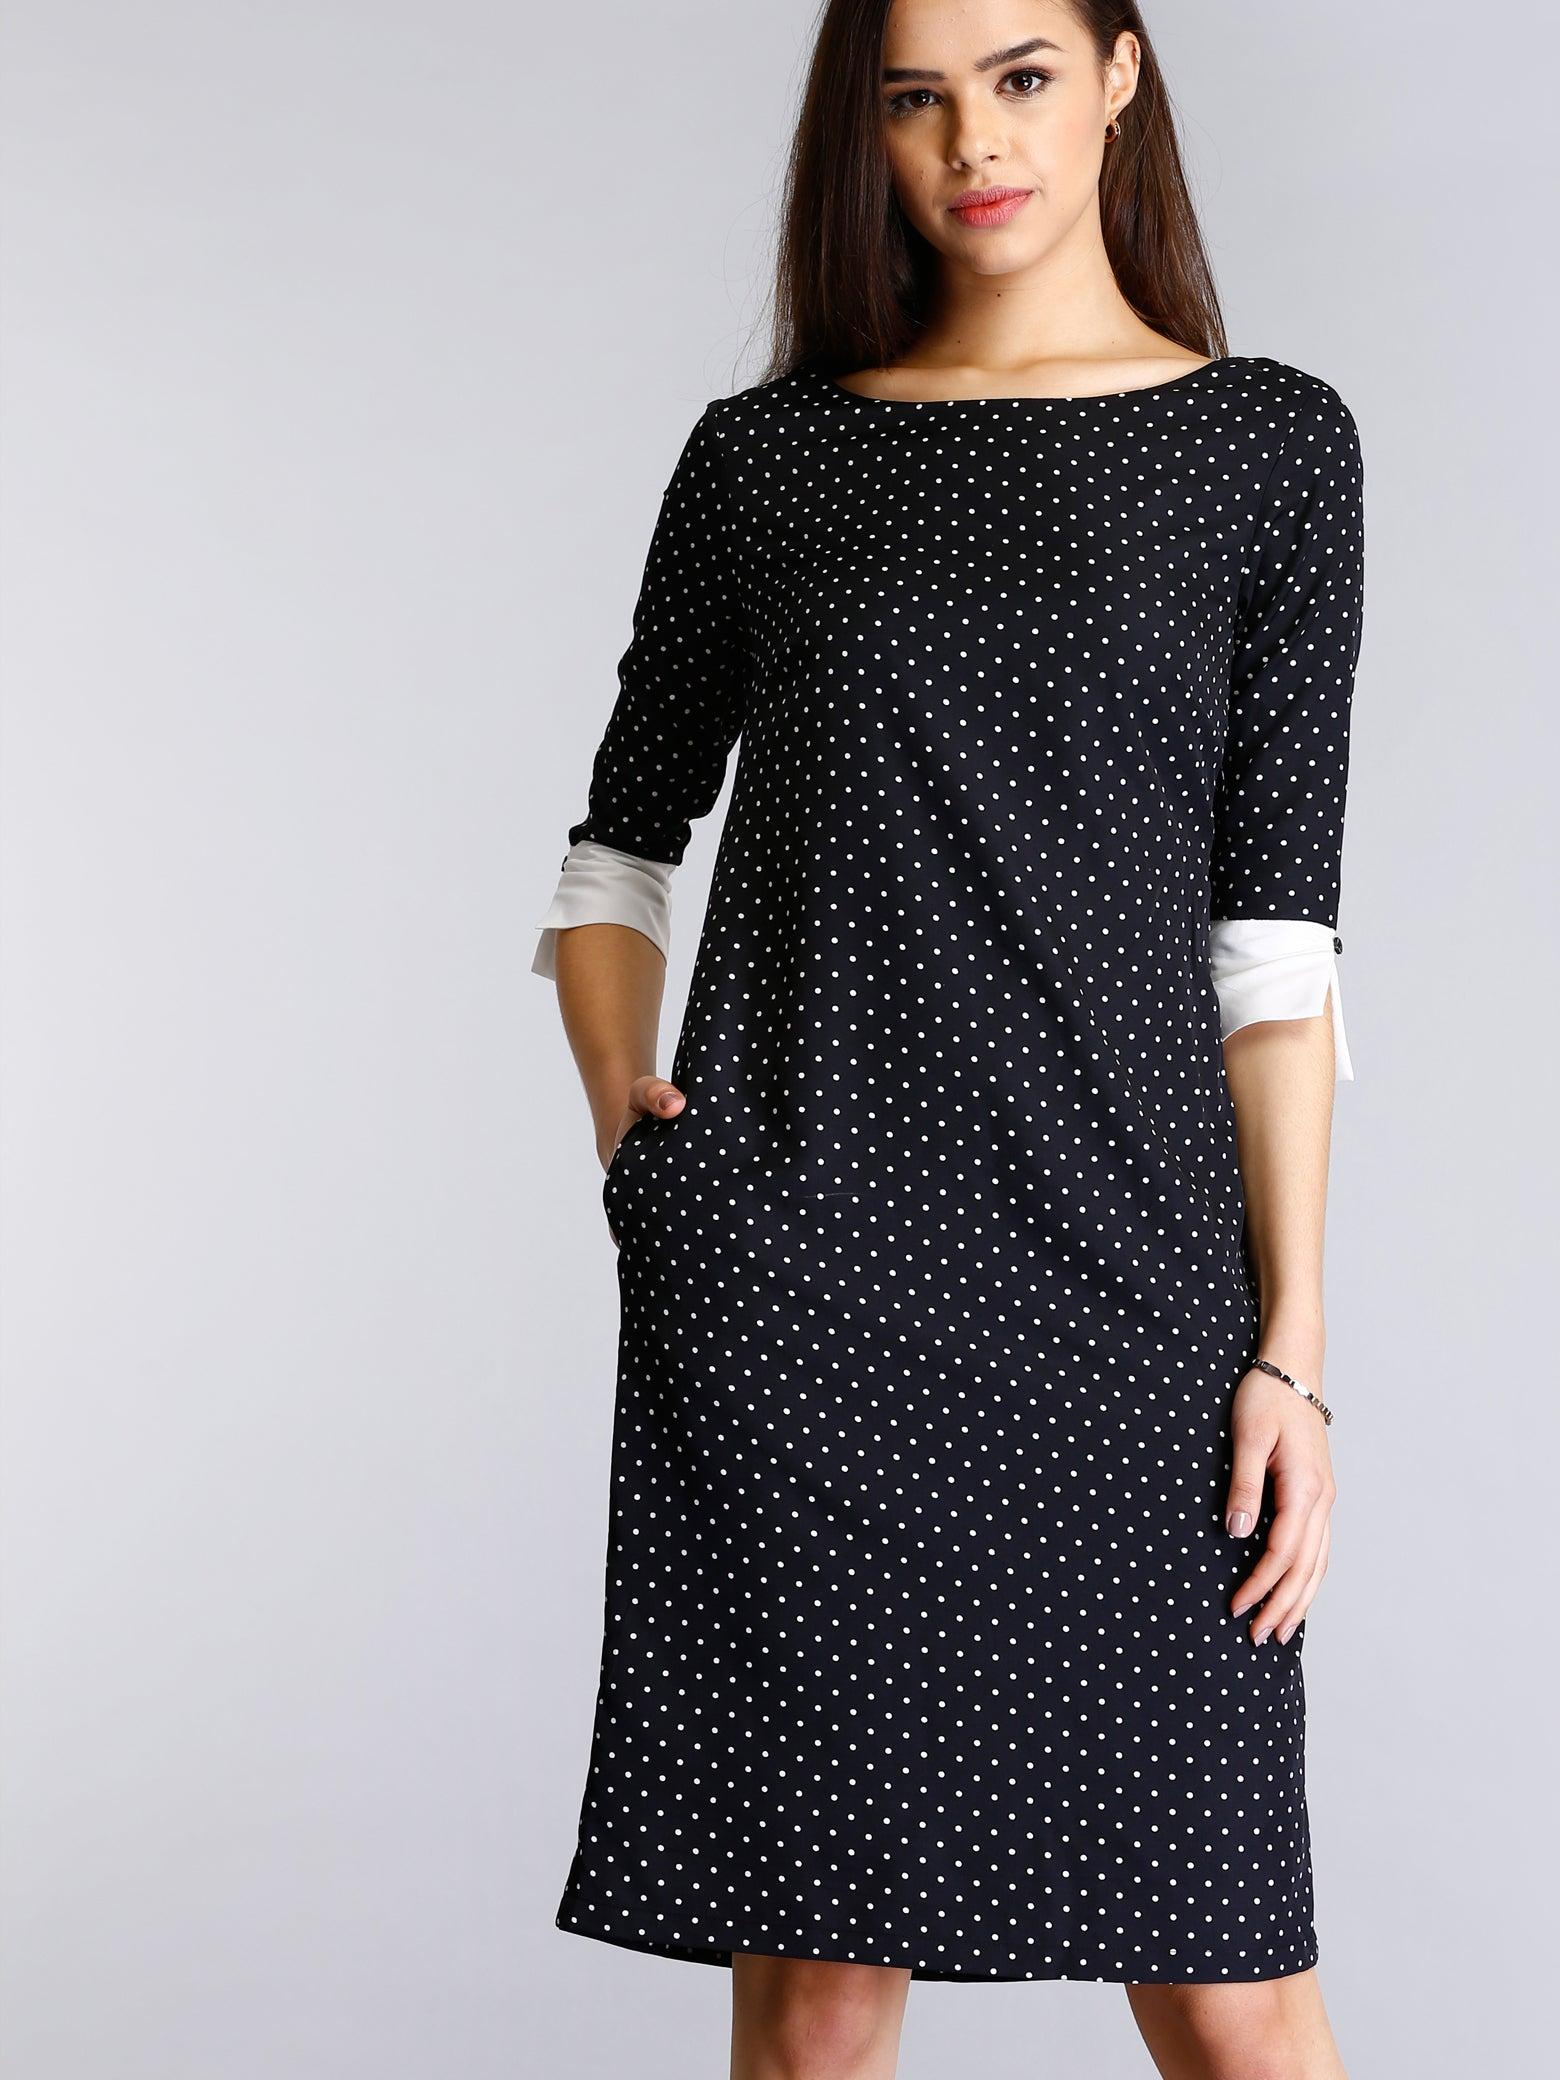 Colour Block Polka Dot Shift Dress - Black and White| Formal Dresses